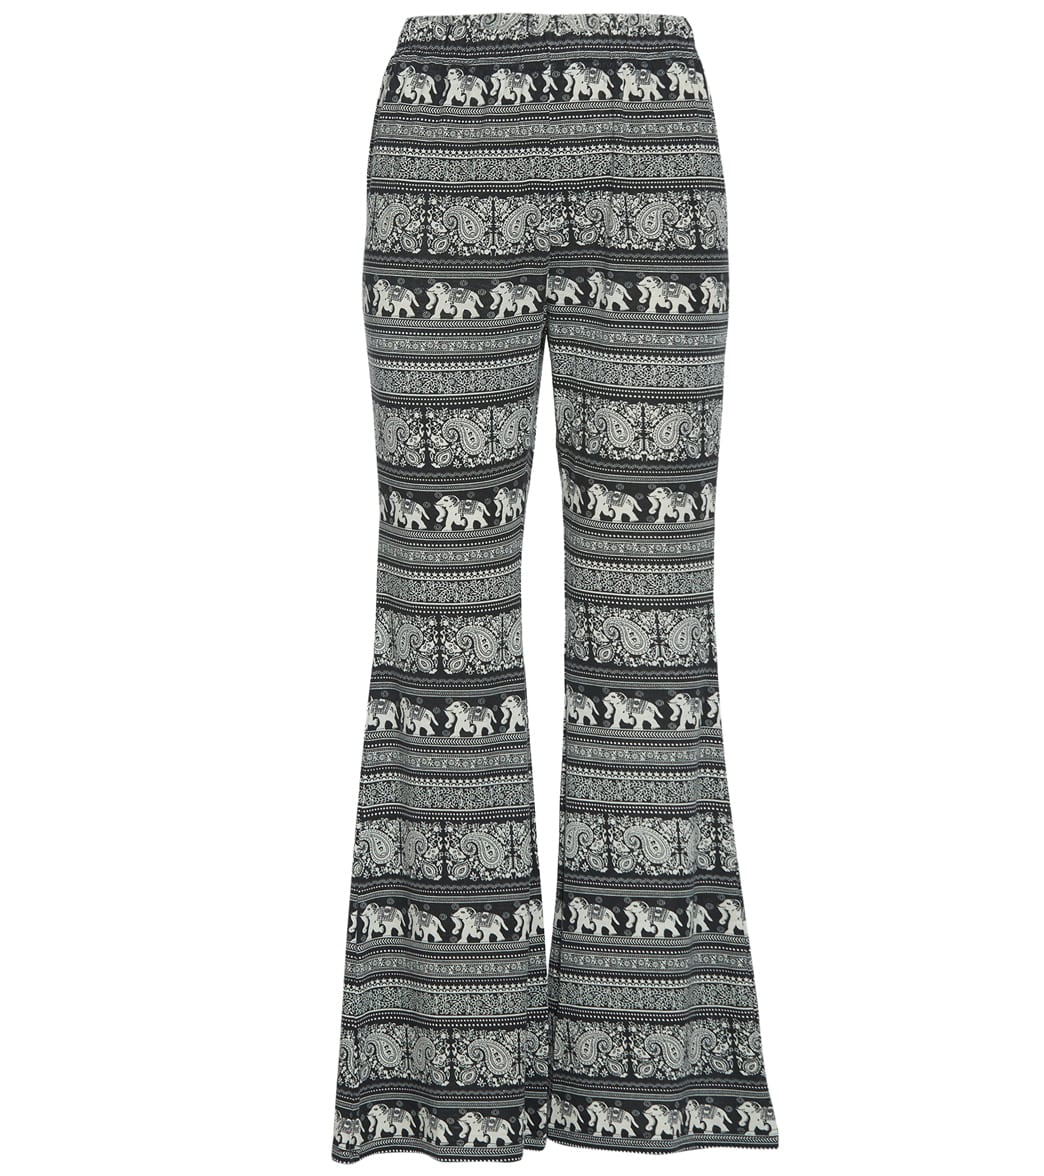 Yak & Yeti Elephant Print Yoga Pants - Black/White Small Size Small - Swimoutlet.com